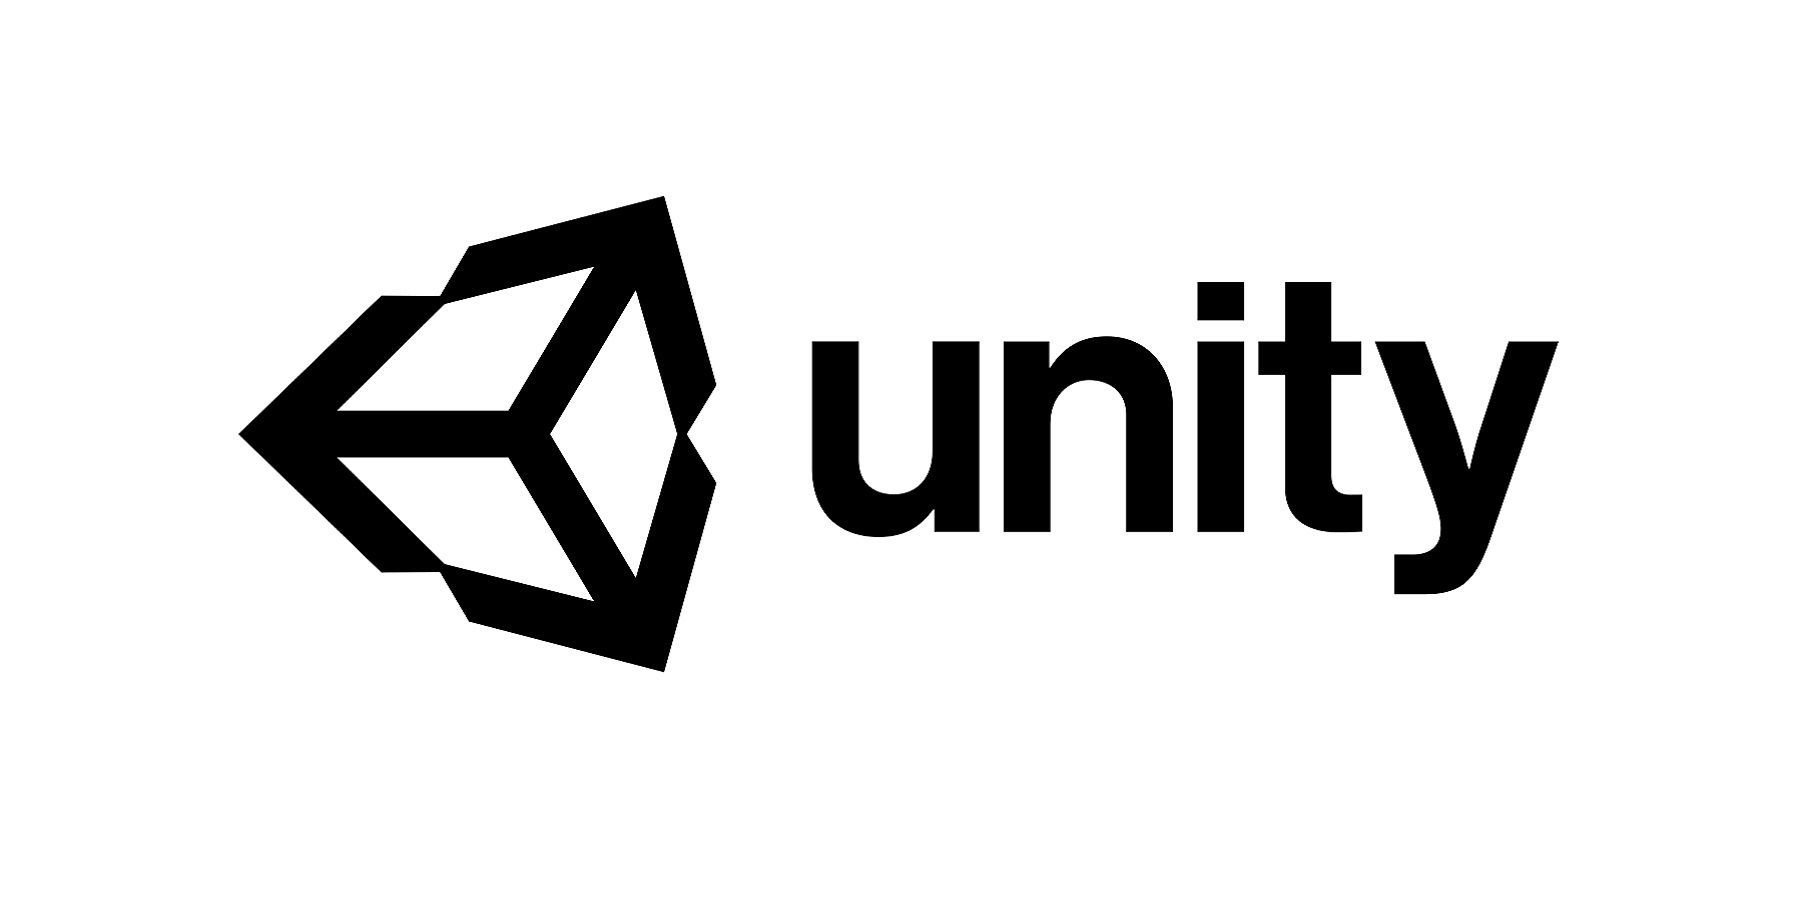 The Unity logo on a white background.